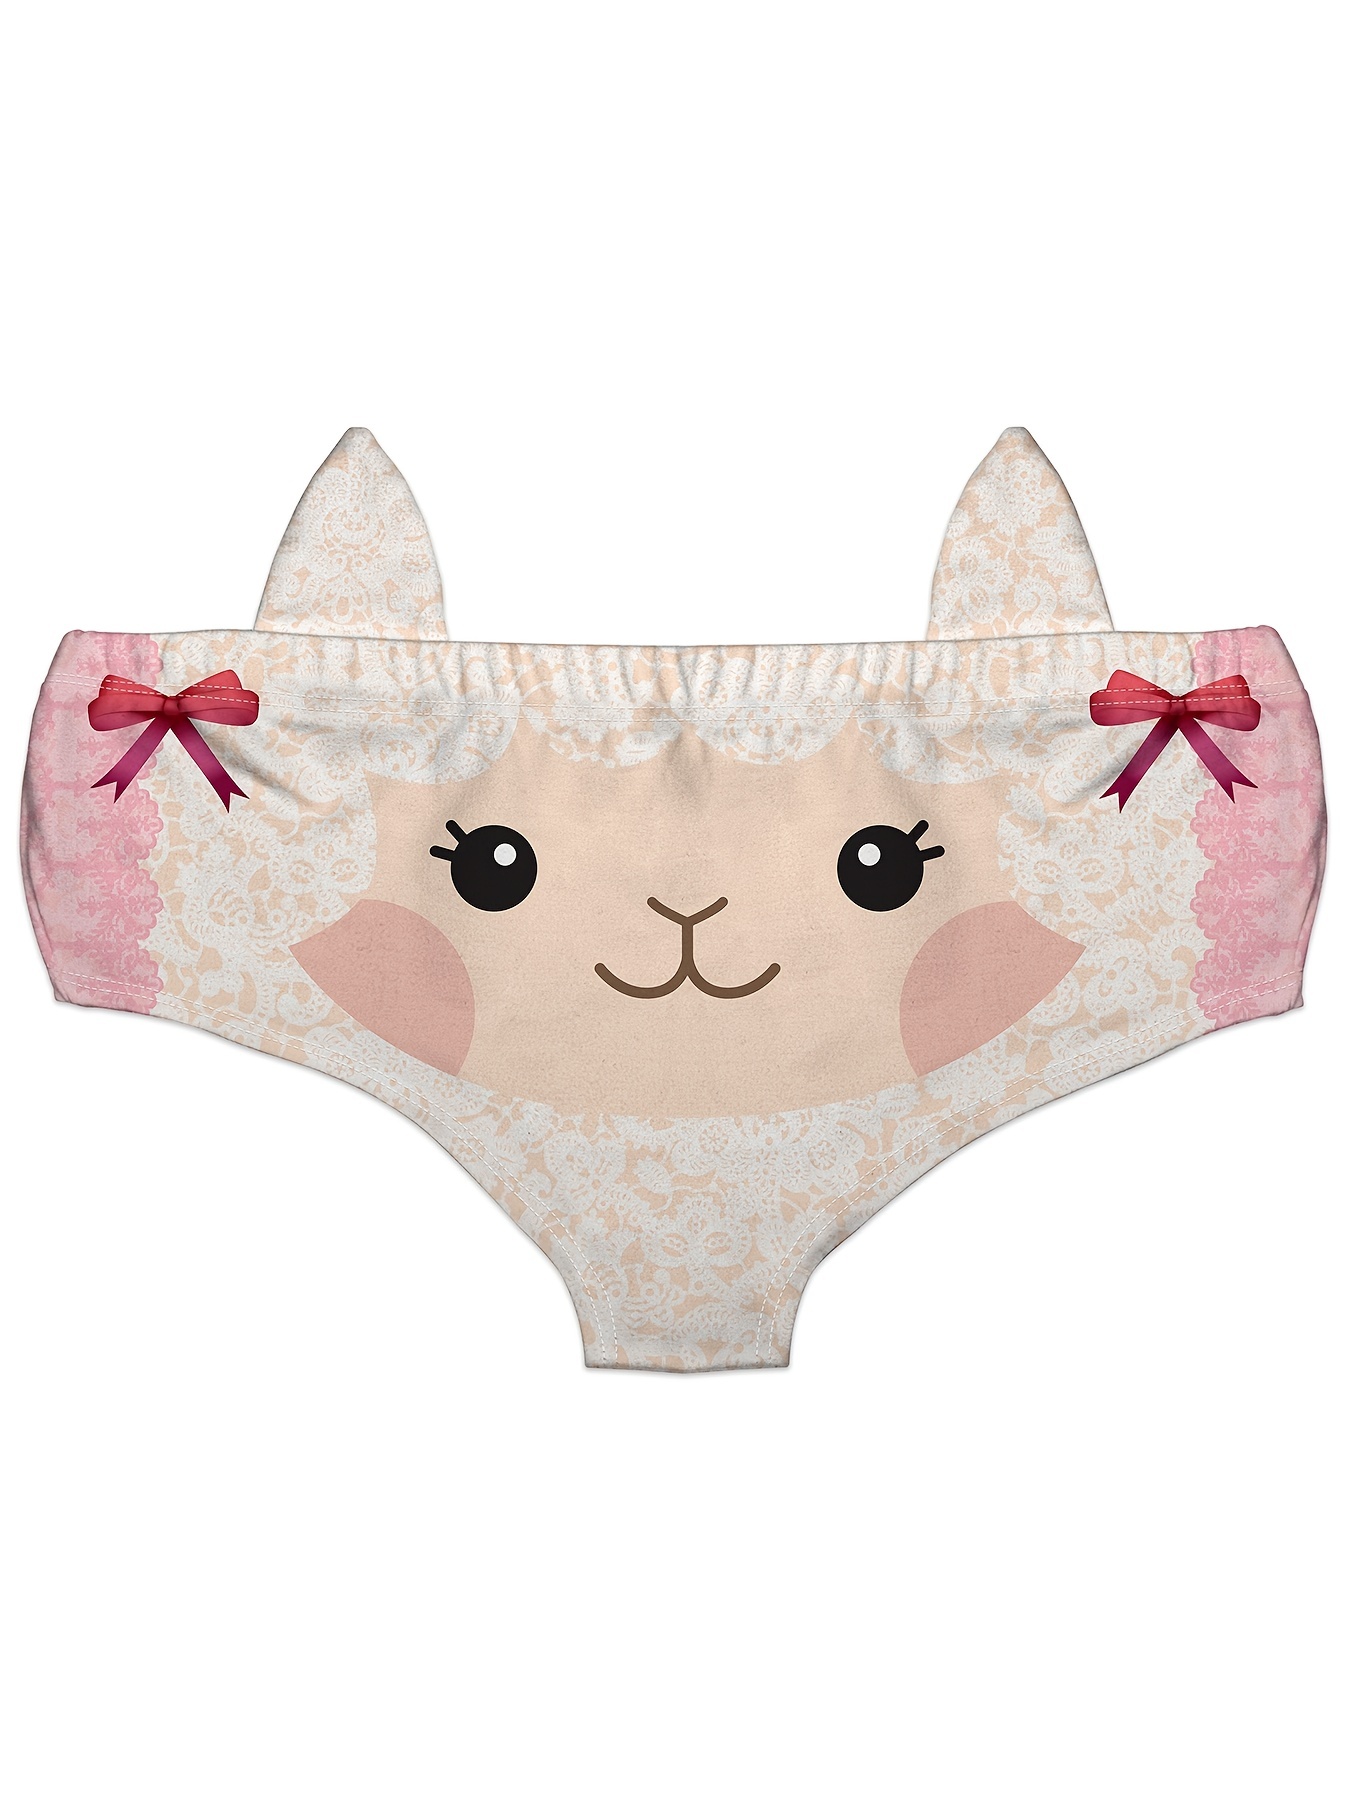 Kawaii Neko Underwear, Chicks Panties, Panties Briefs, Sheep Panties